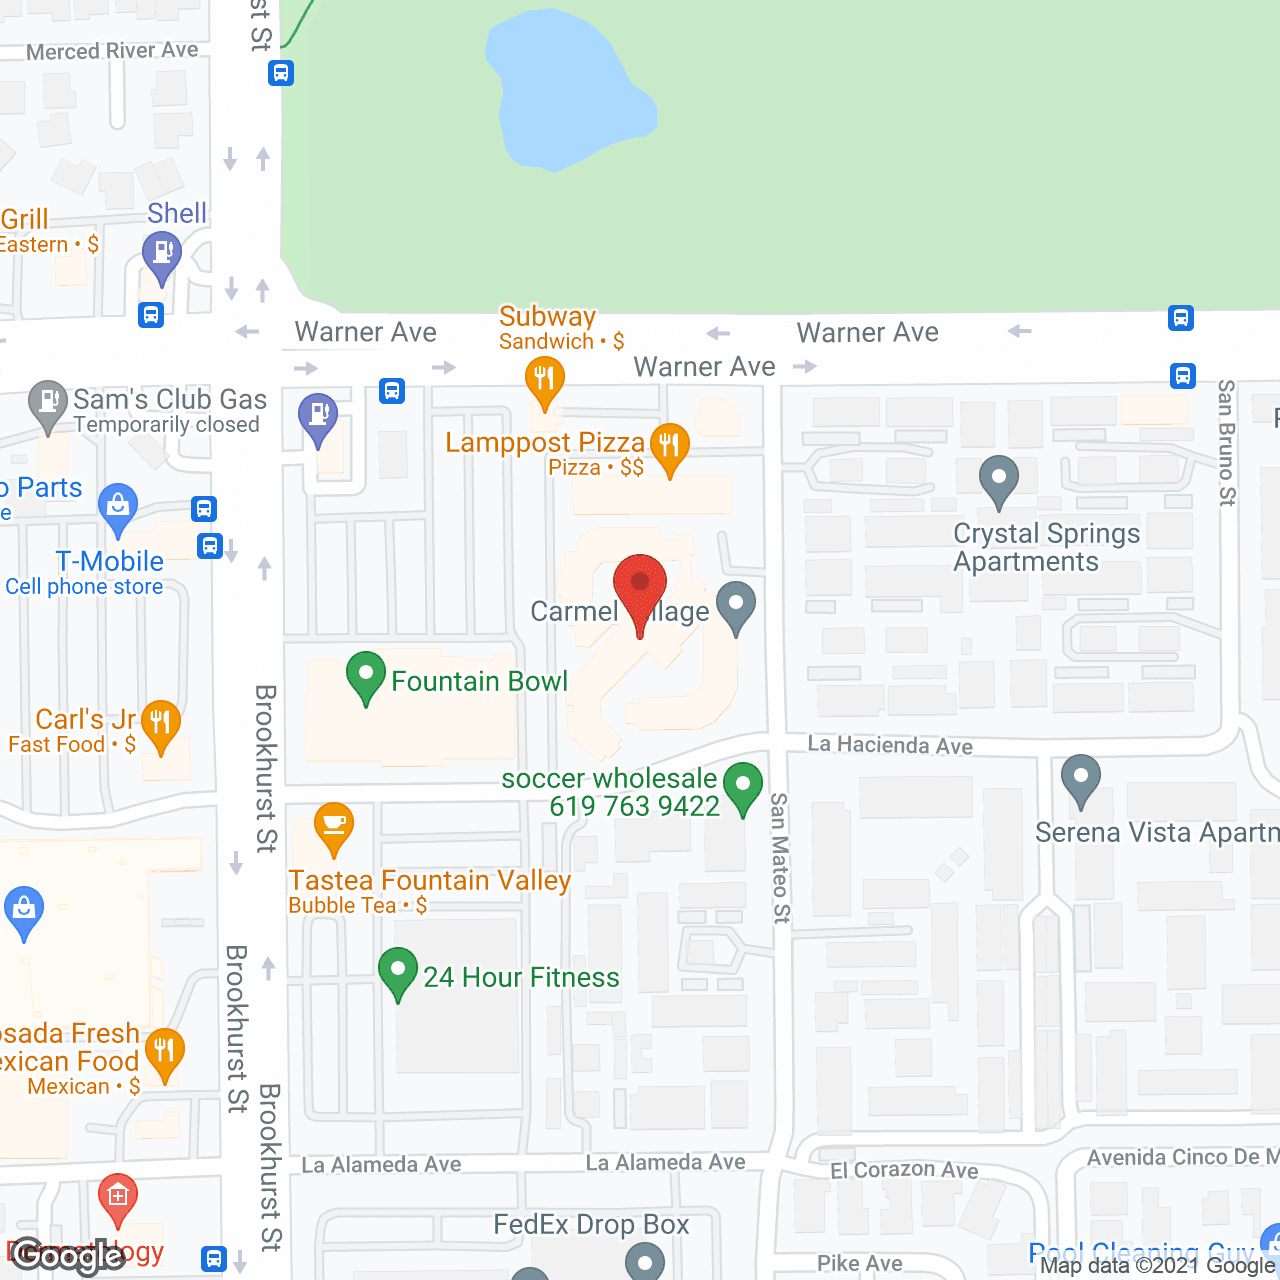 Carmel Village in google map